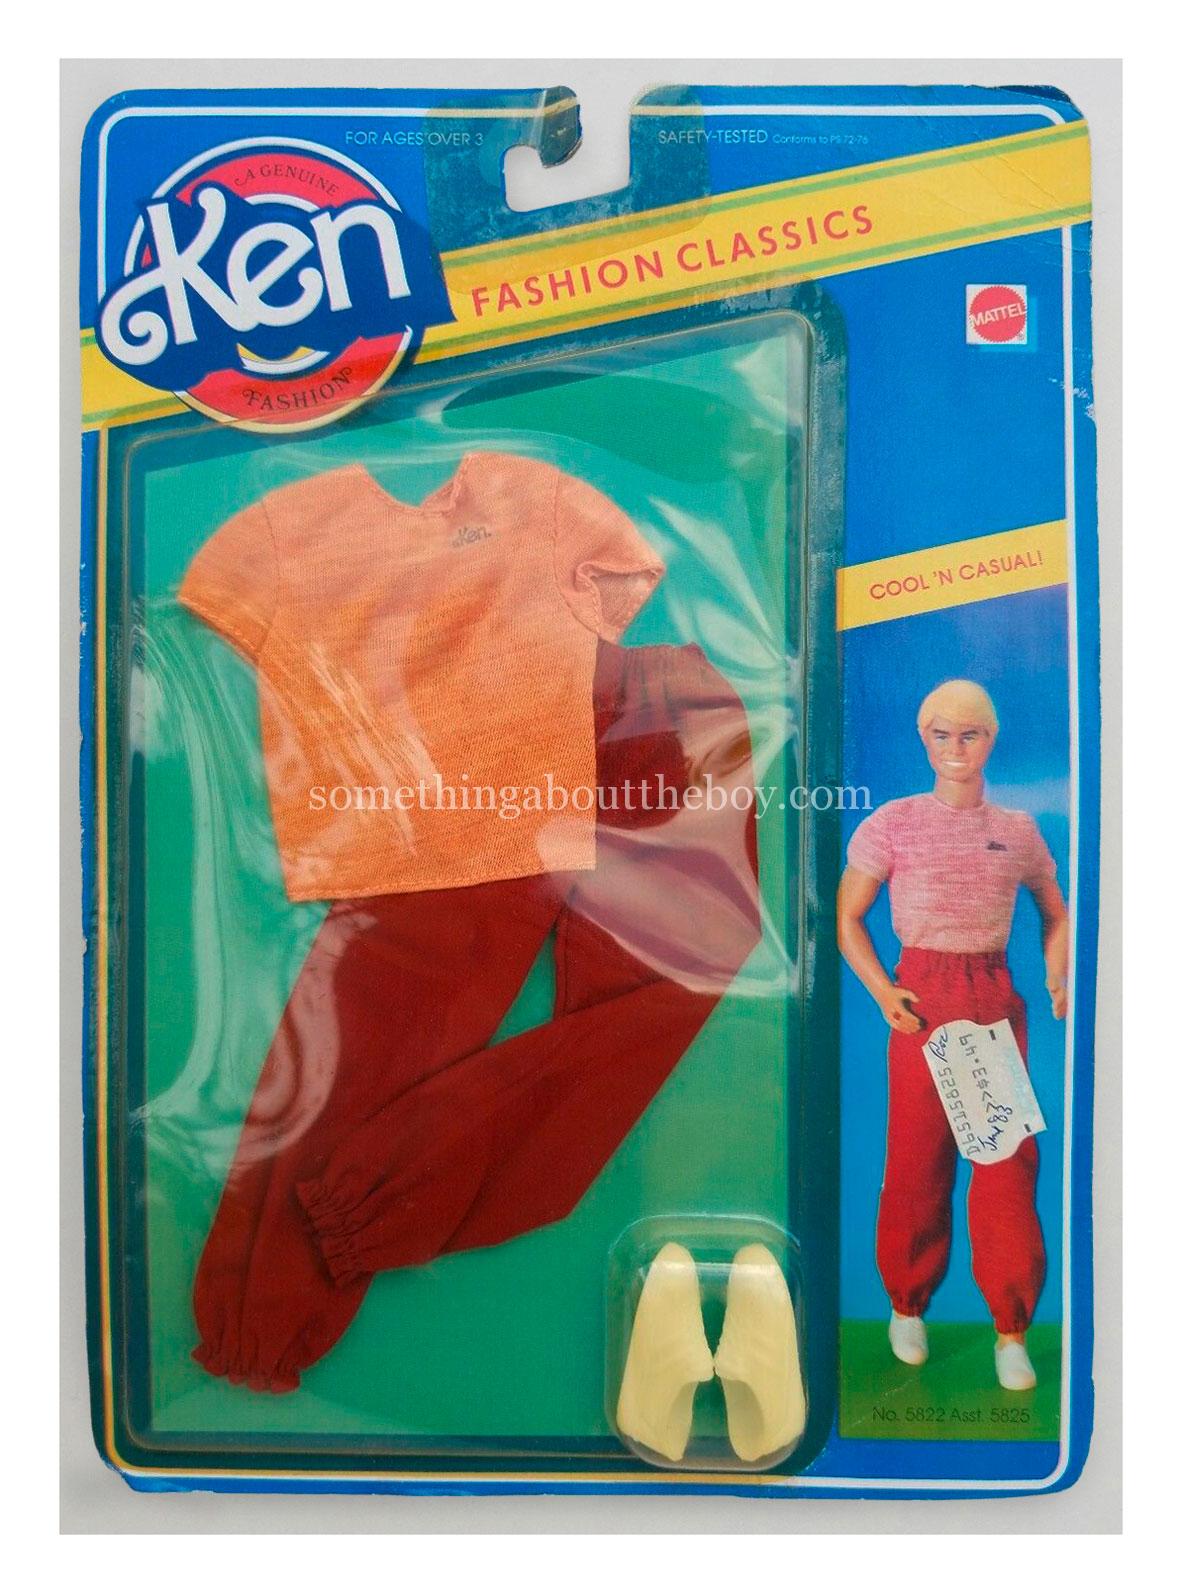 1983 Fashion Classics #5822 in original packaging